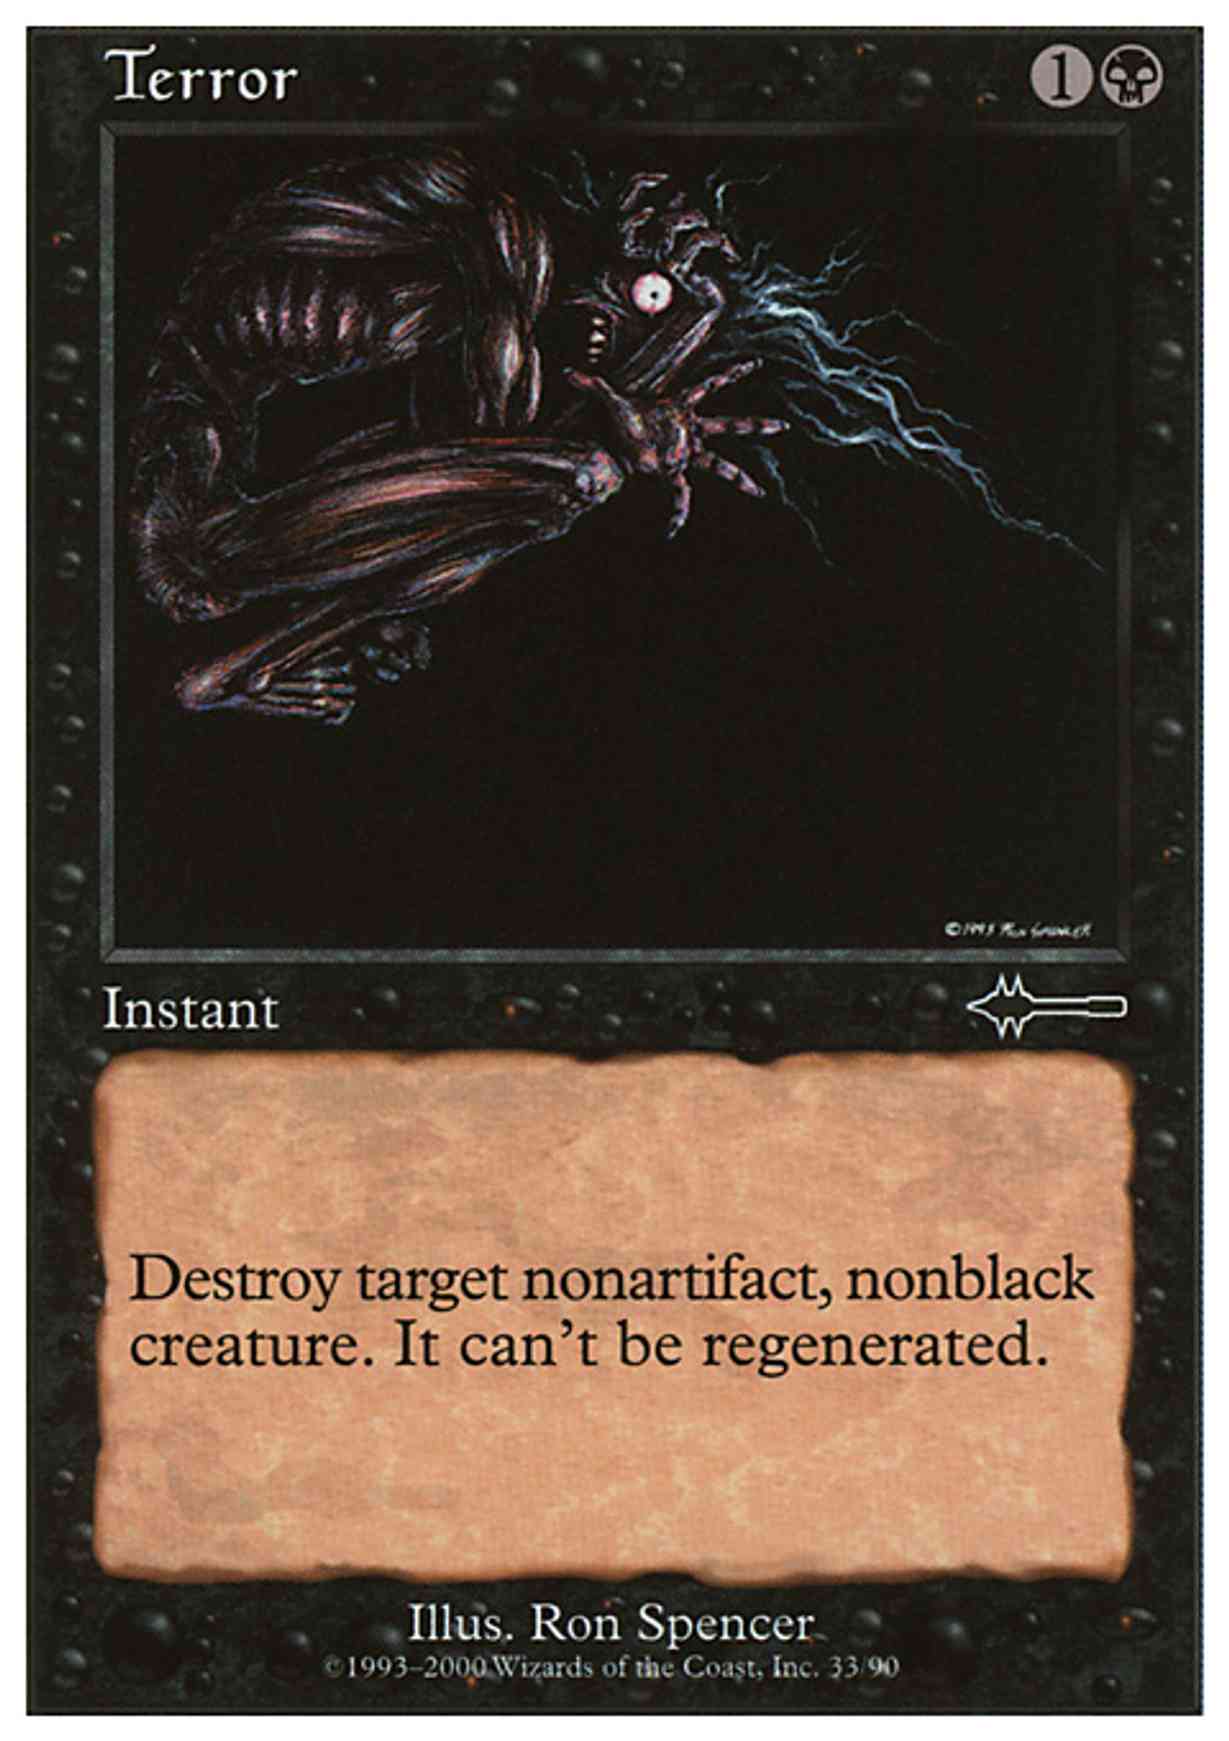 Terror magic card front